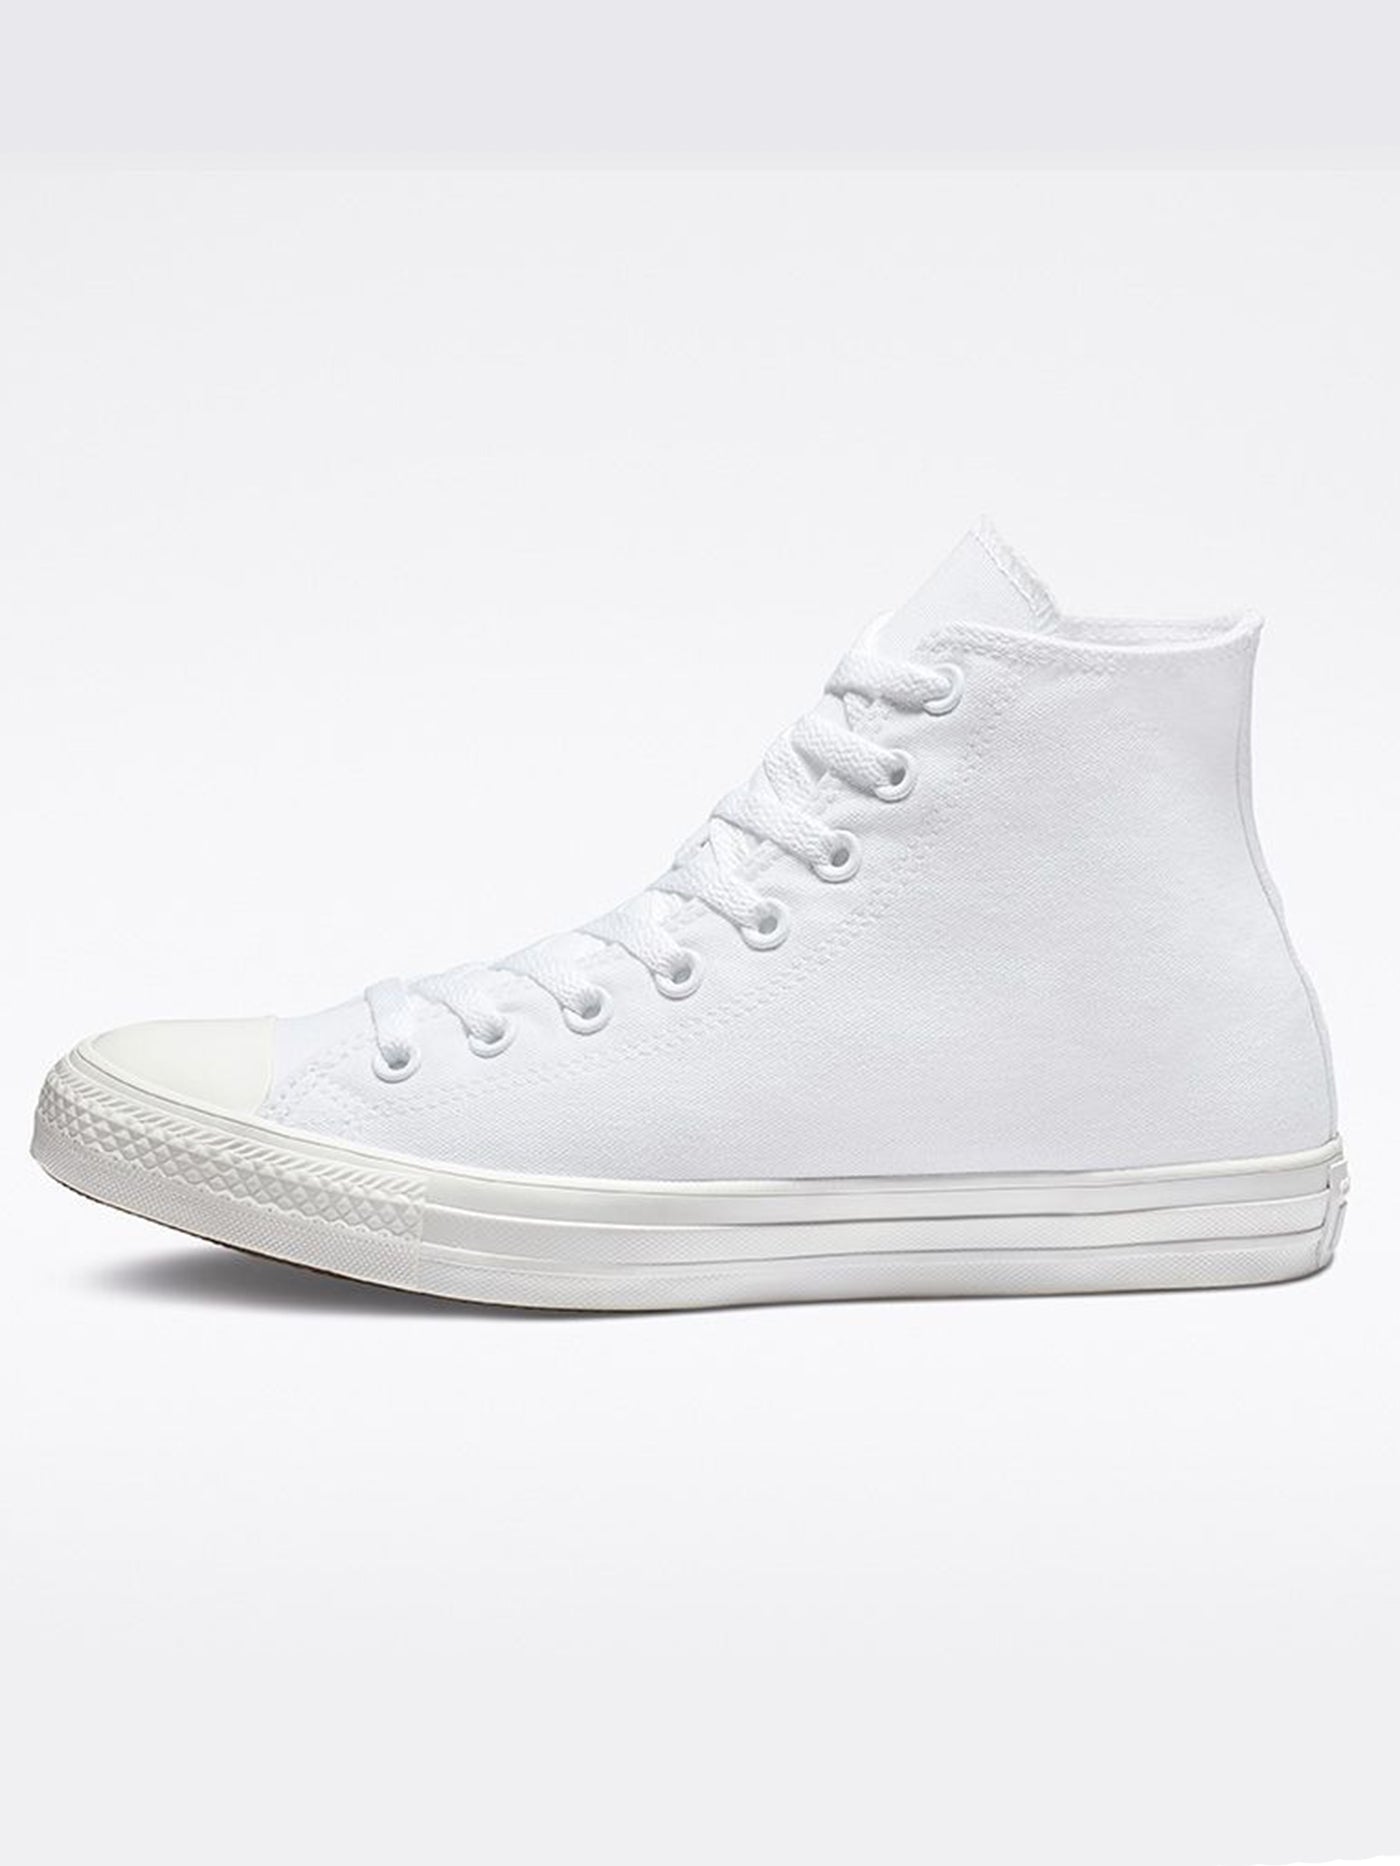 Converse CT All Star Canvas Hi White Monochrome Shoes